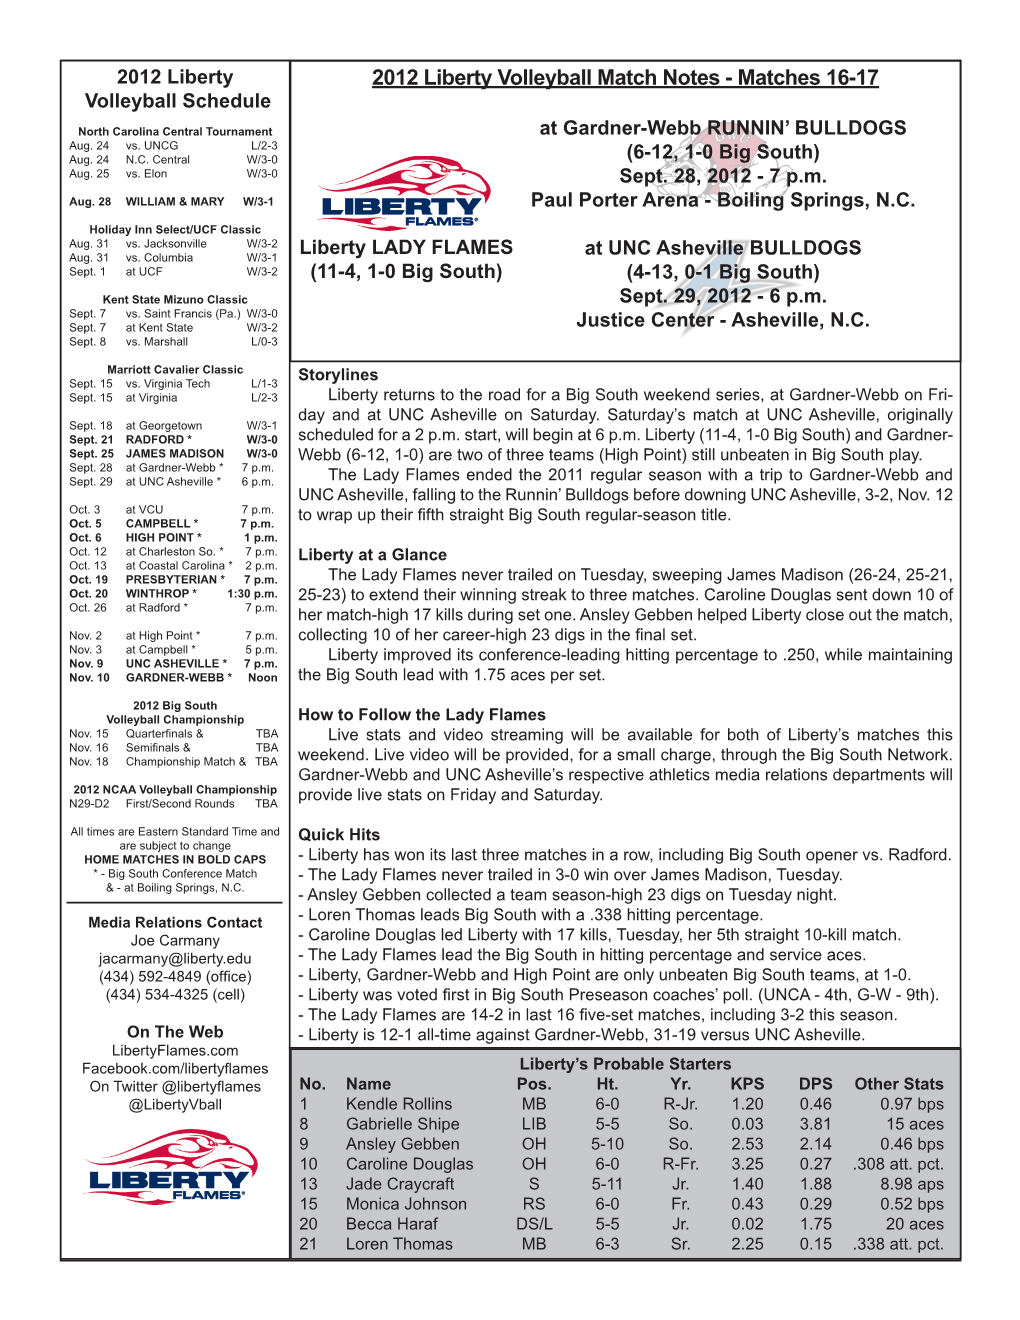 2012 Liberty Volleyball Match Notes - Matches 16-17 Volleyball Schedule North Carolina Central Tournament at Gardner-Webb RUNNIN’ BULLDOGS Aug